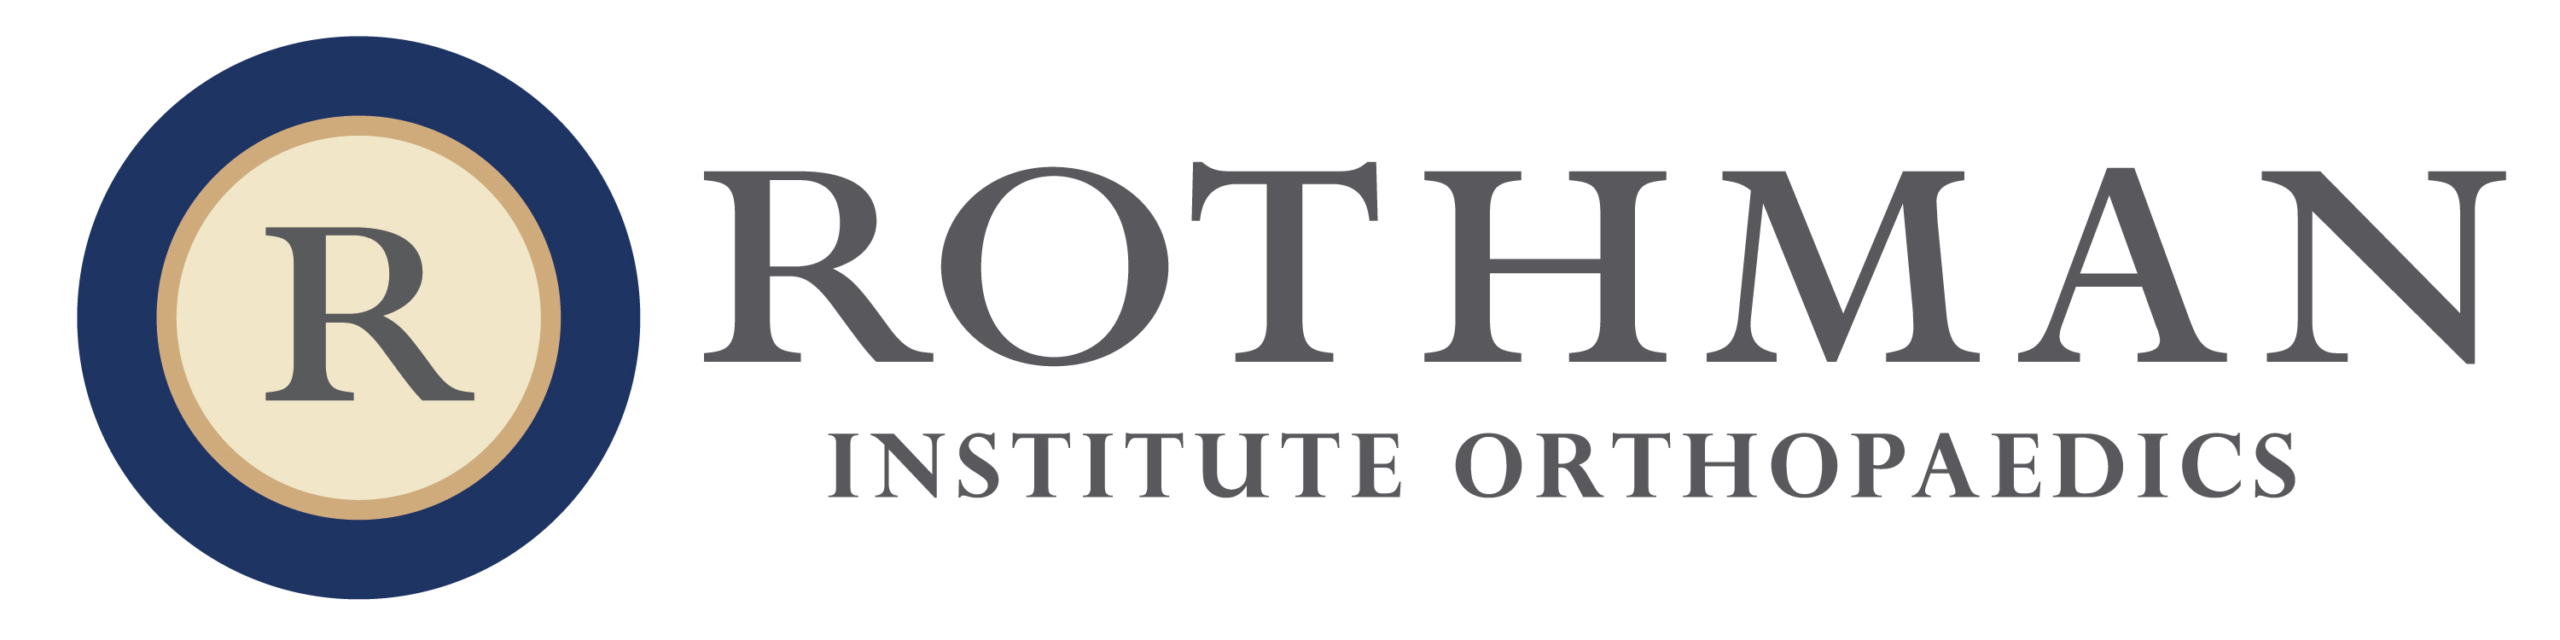 Rothman logo